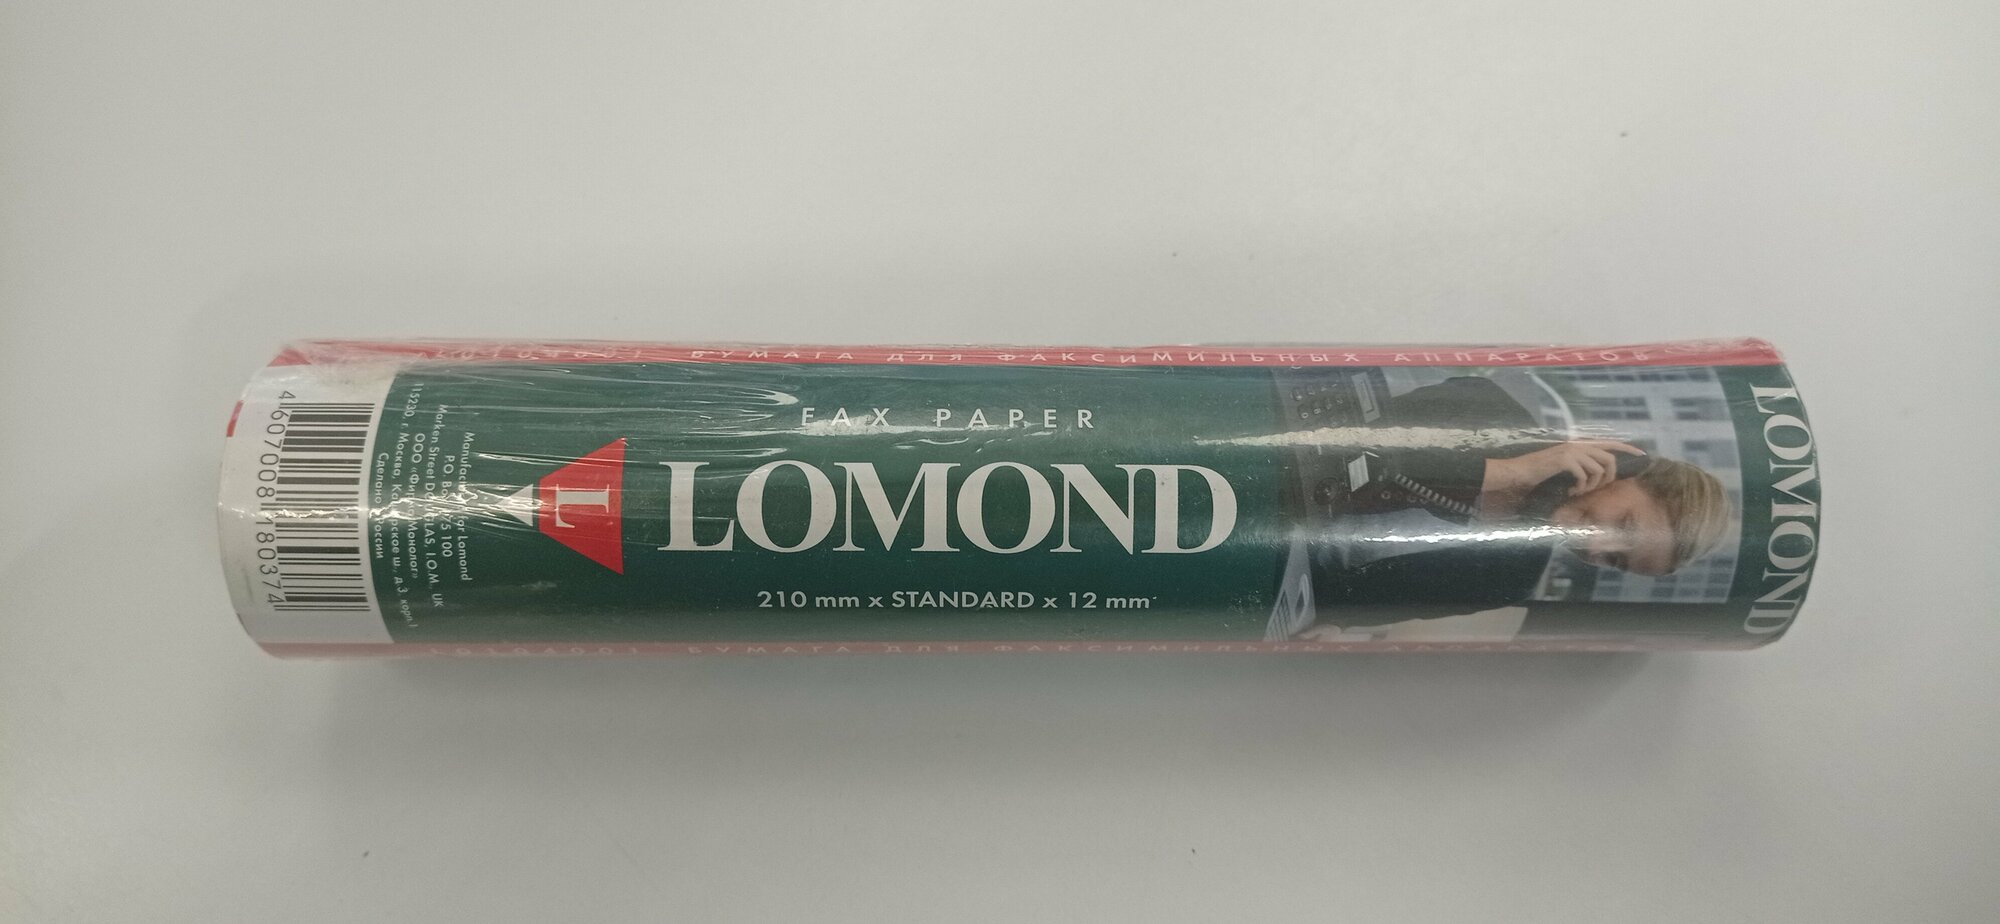 Термобумага Lomond для факсов (0104013/0104033), 210 мм х 25 м х 12 мм